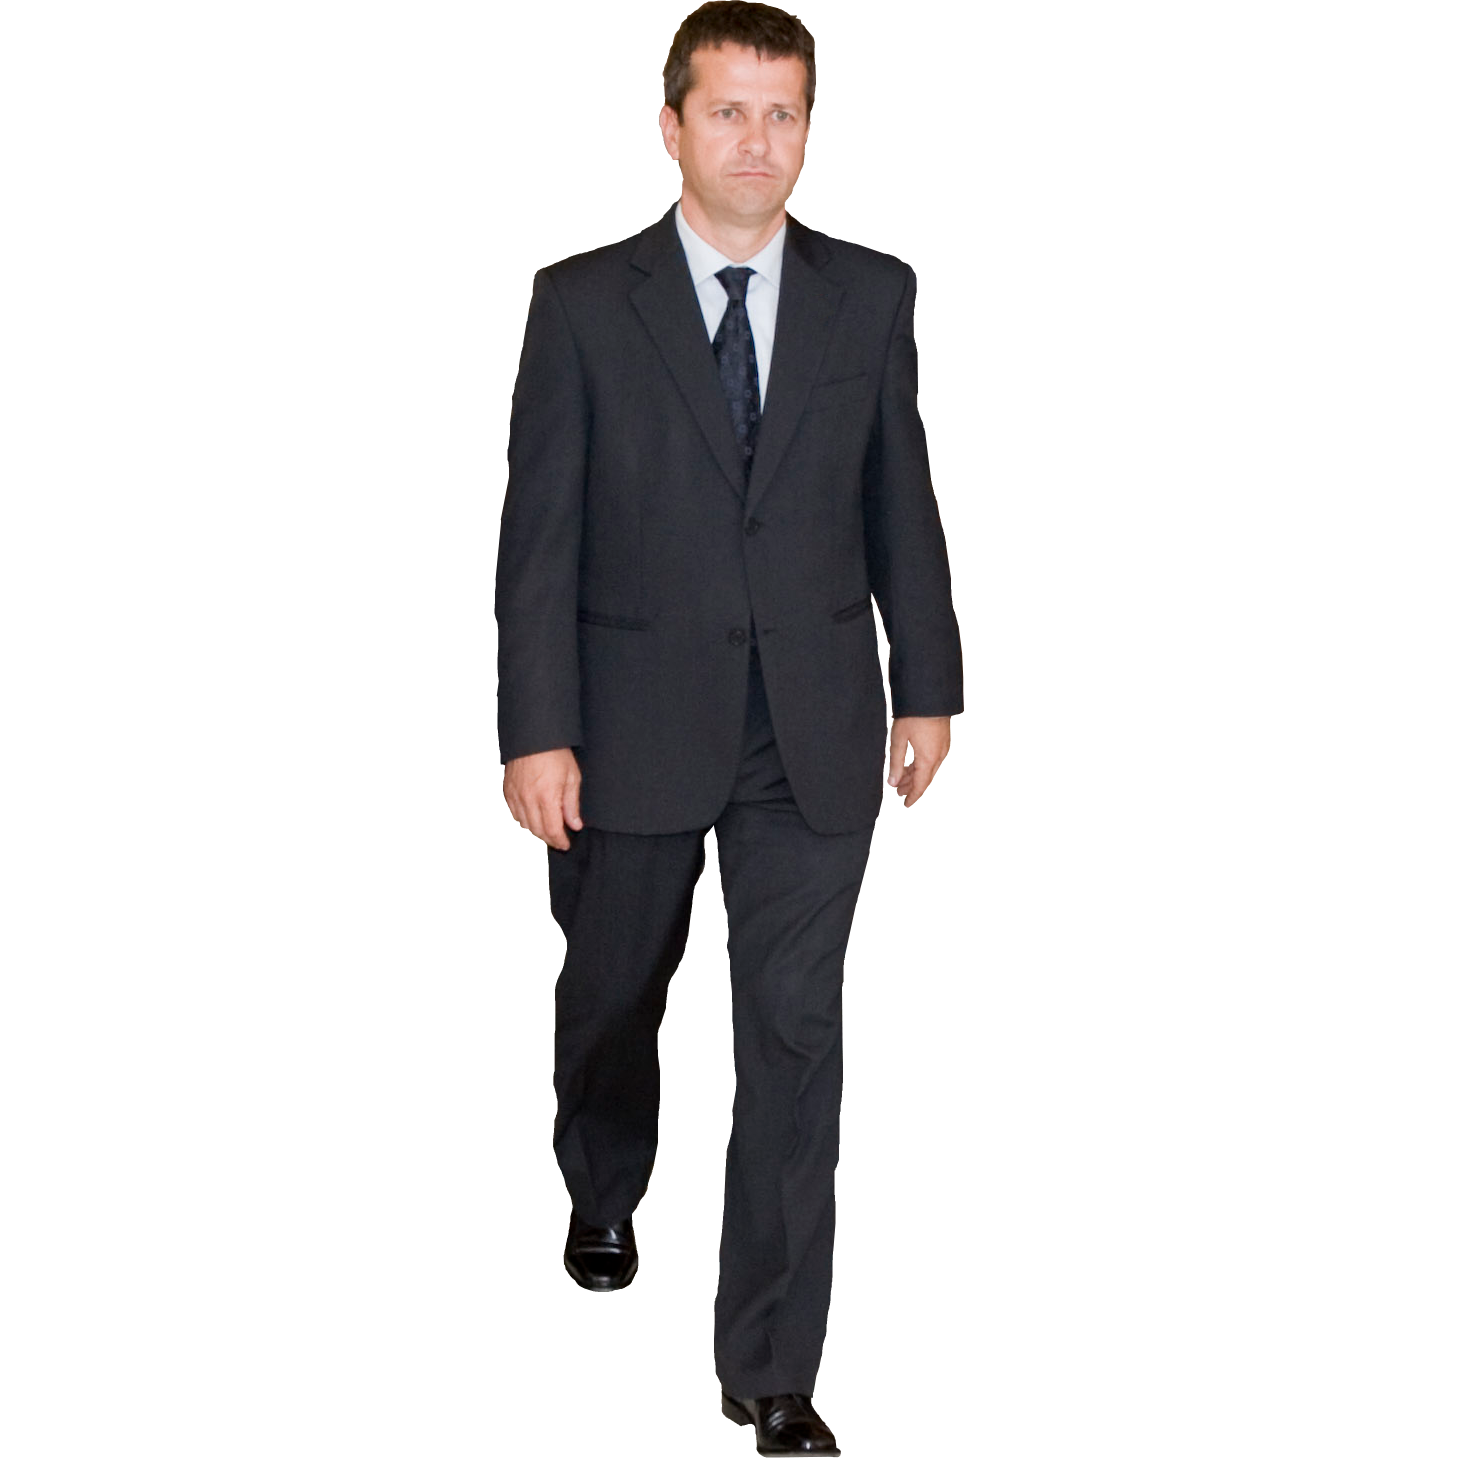 Suit Png Transparent Image - Person In A Suit, Transparent background PNG HD thumbnail